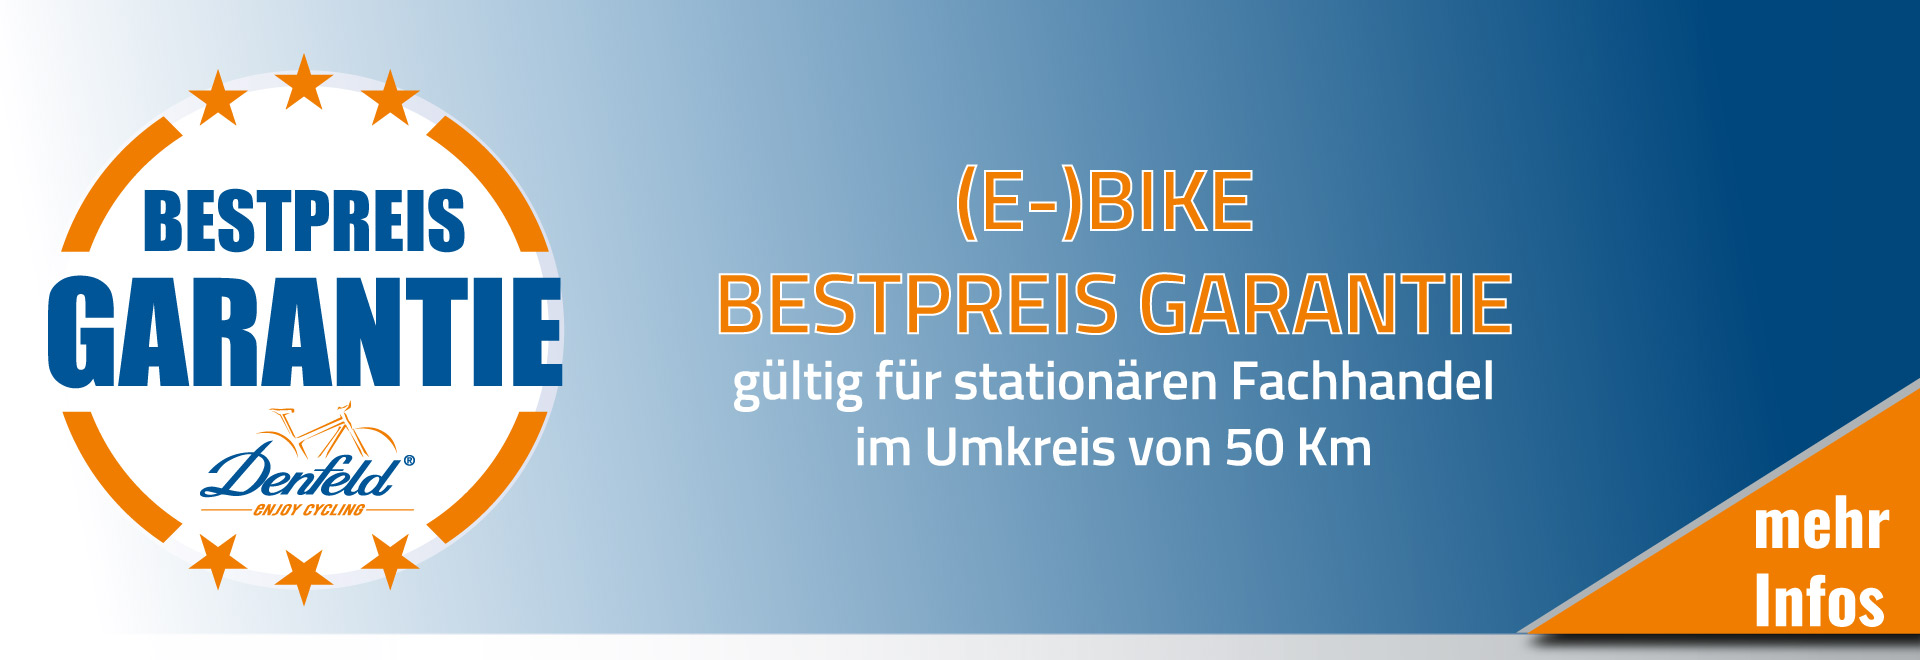 Fahrradbekleidung: Top Markenauswahl bei Denfeld